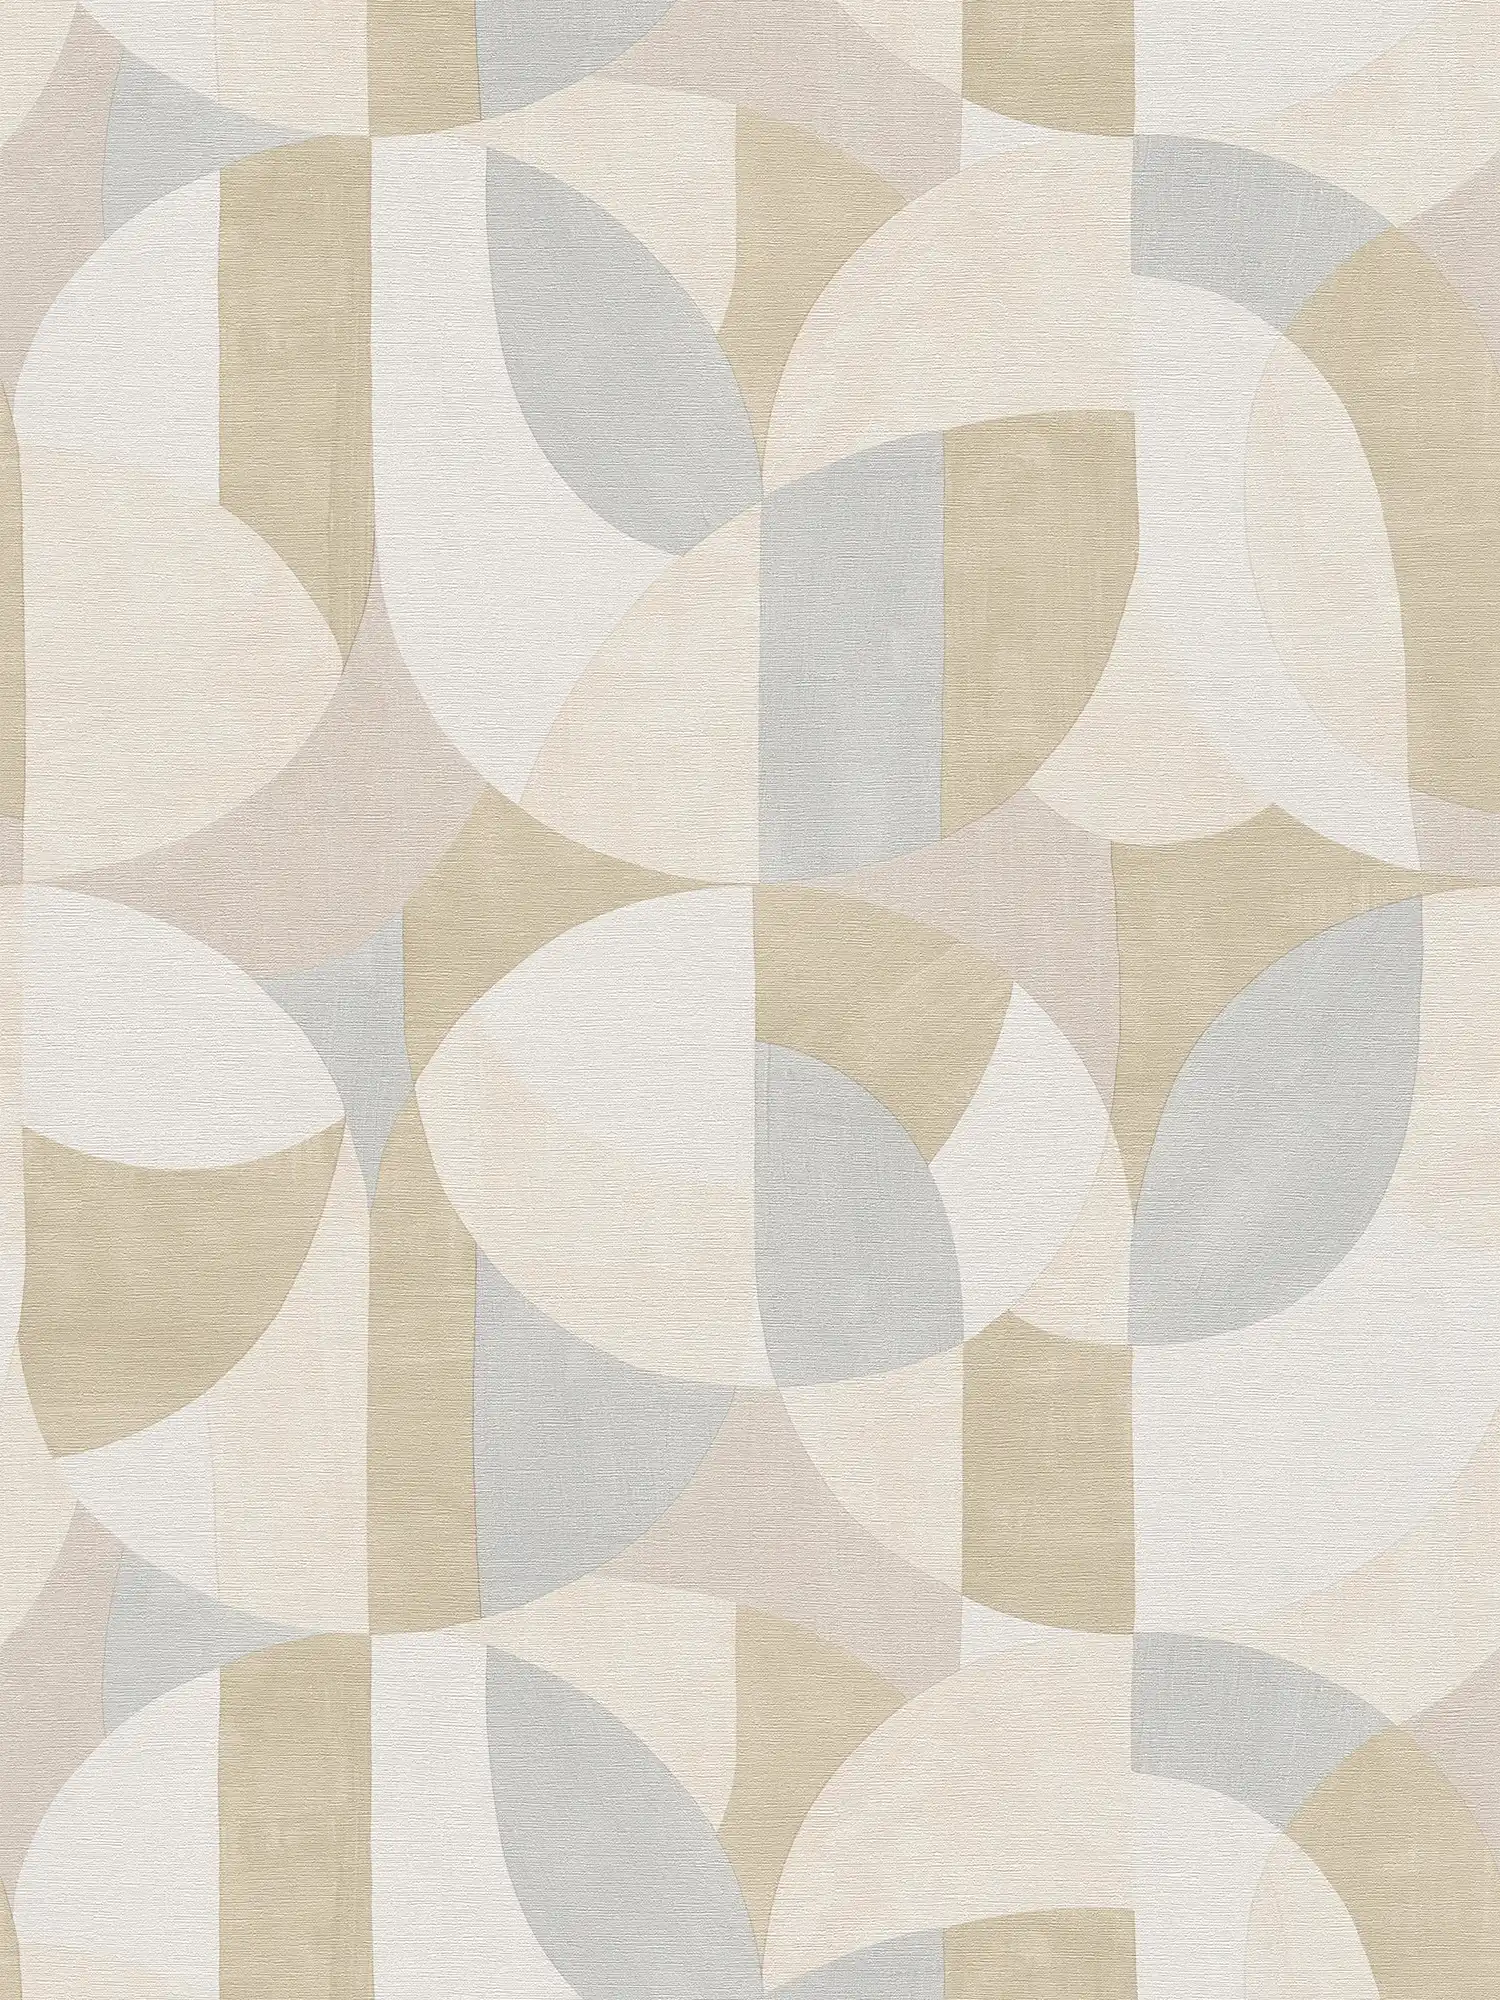 Carta da parati non tessuta con grafica astratta in stile Bauhaus - grigio, crema, beige
